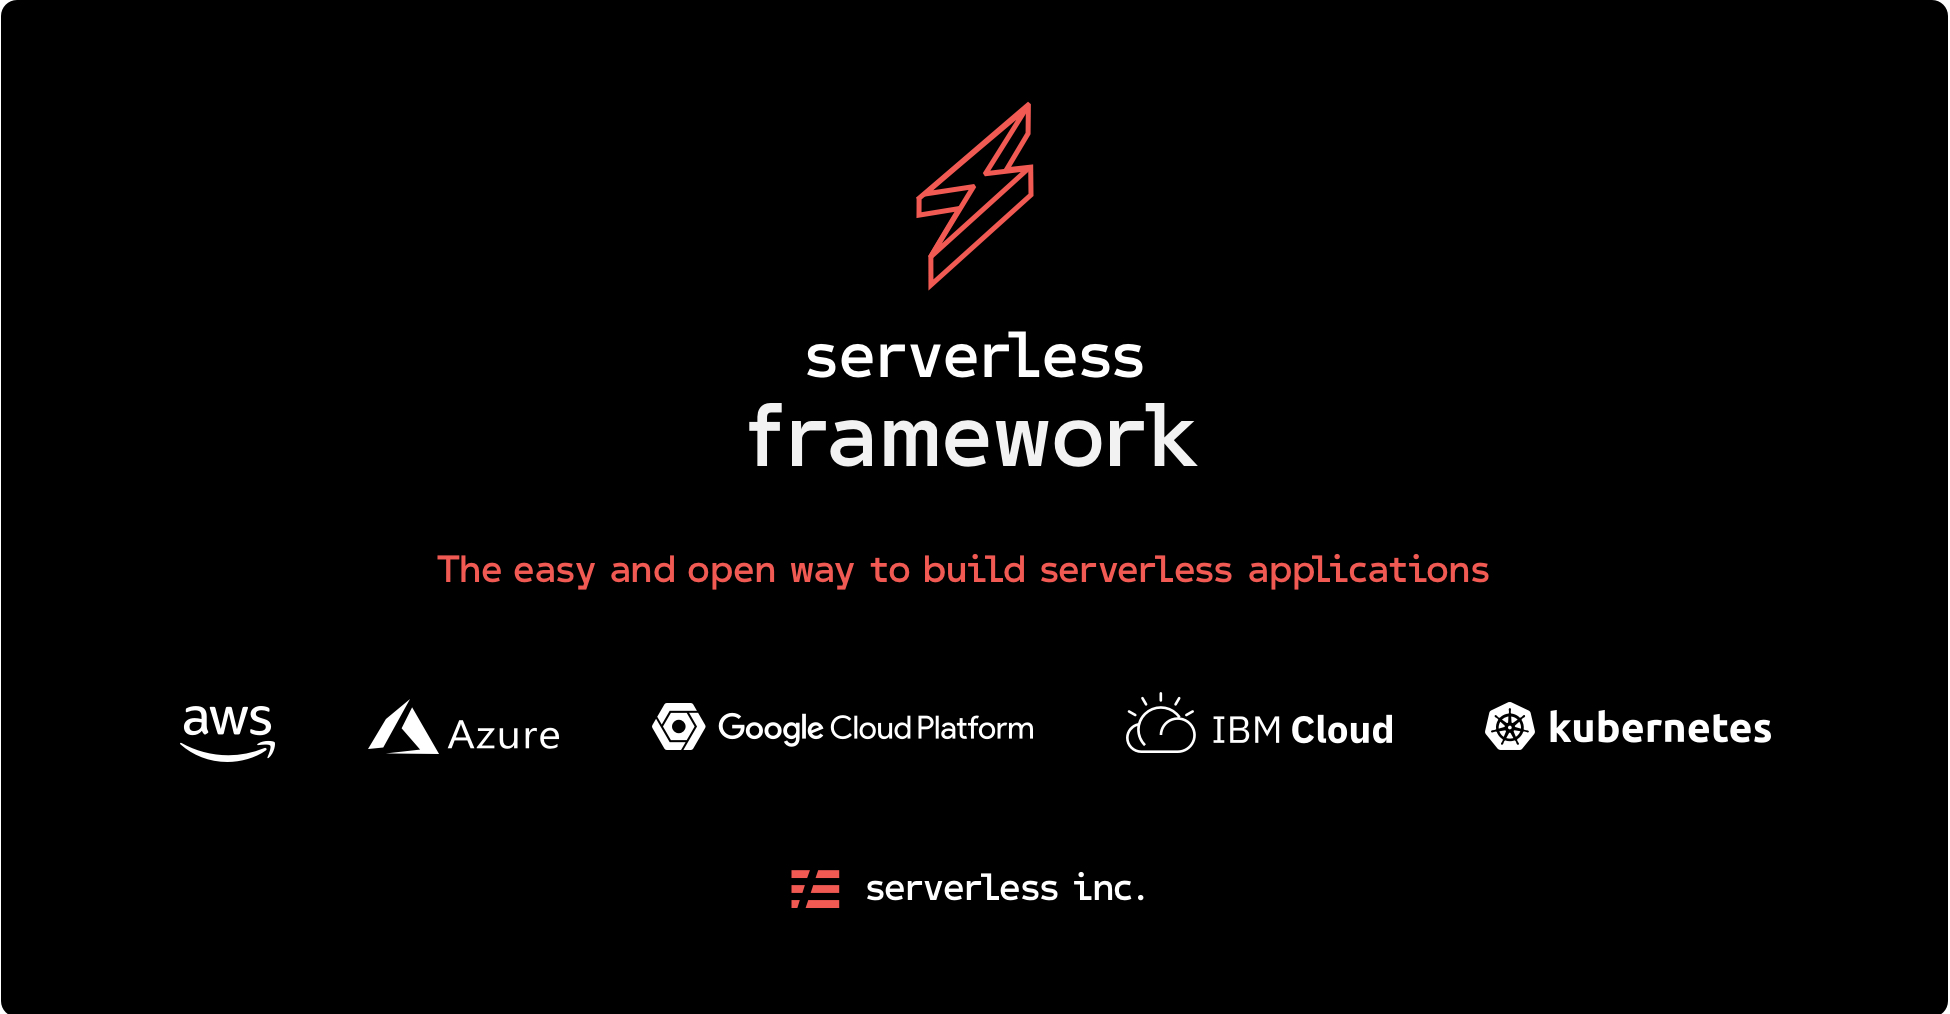 Serverless framework 101